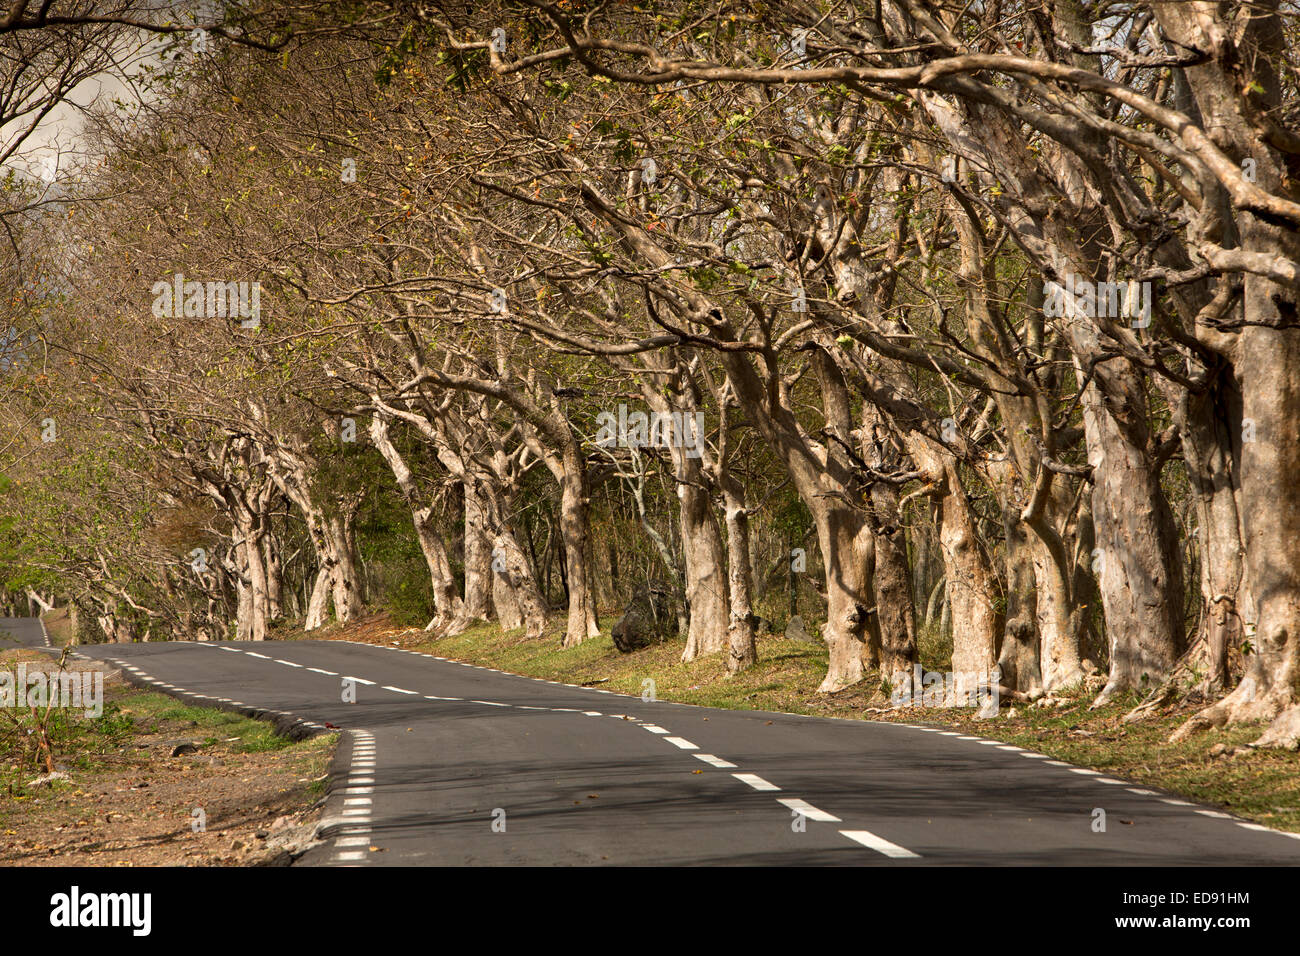 Mauritius, Le Morne, gnarled trees overhanging coast road Stock Photo